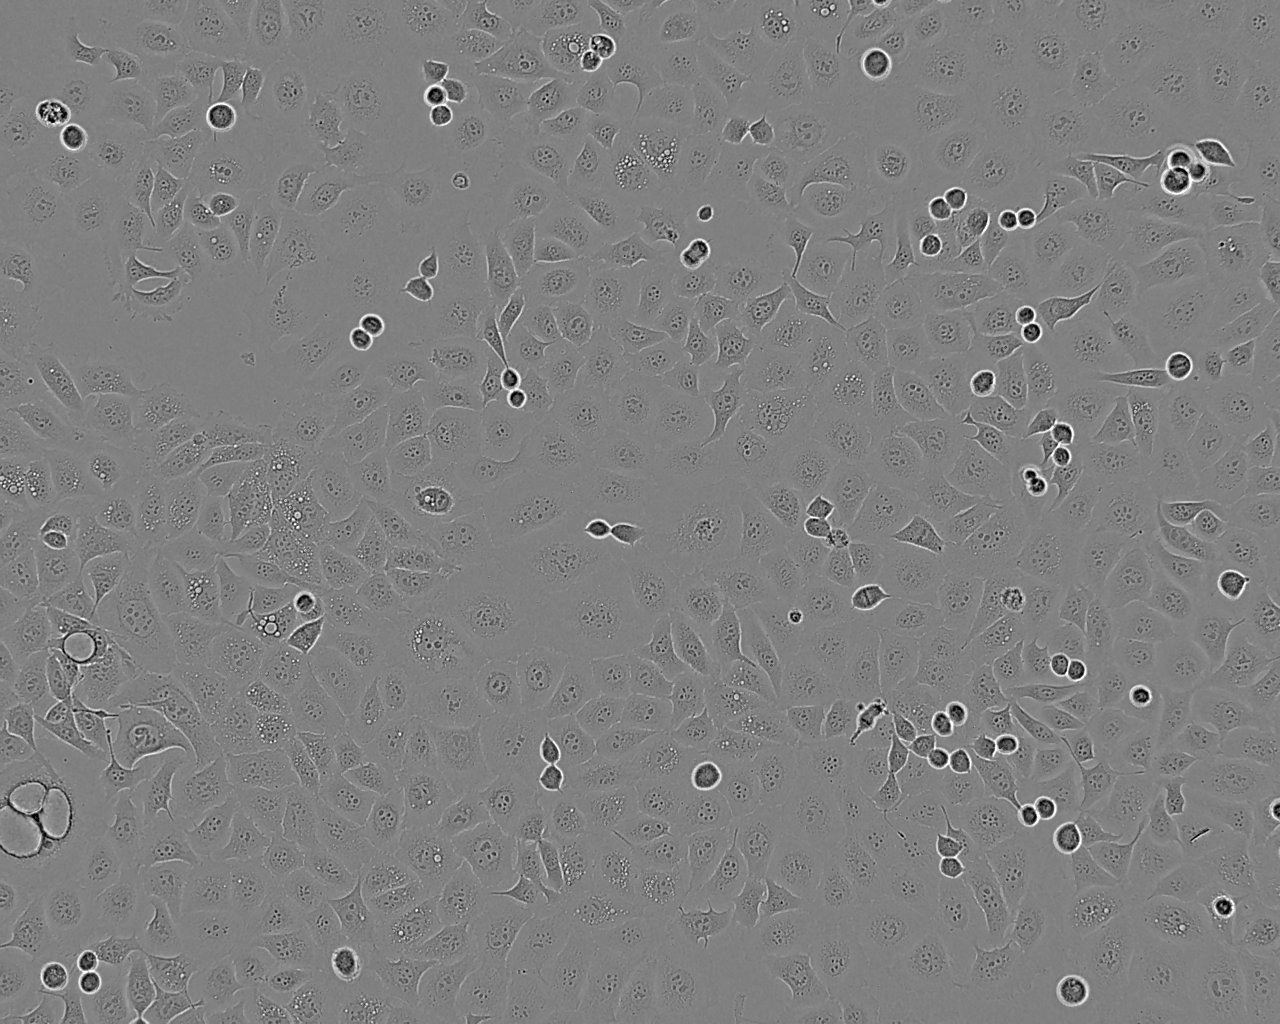 NCI-H1694 Cells|人小细胞肺癌可传代细胞系